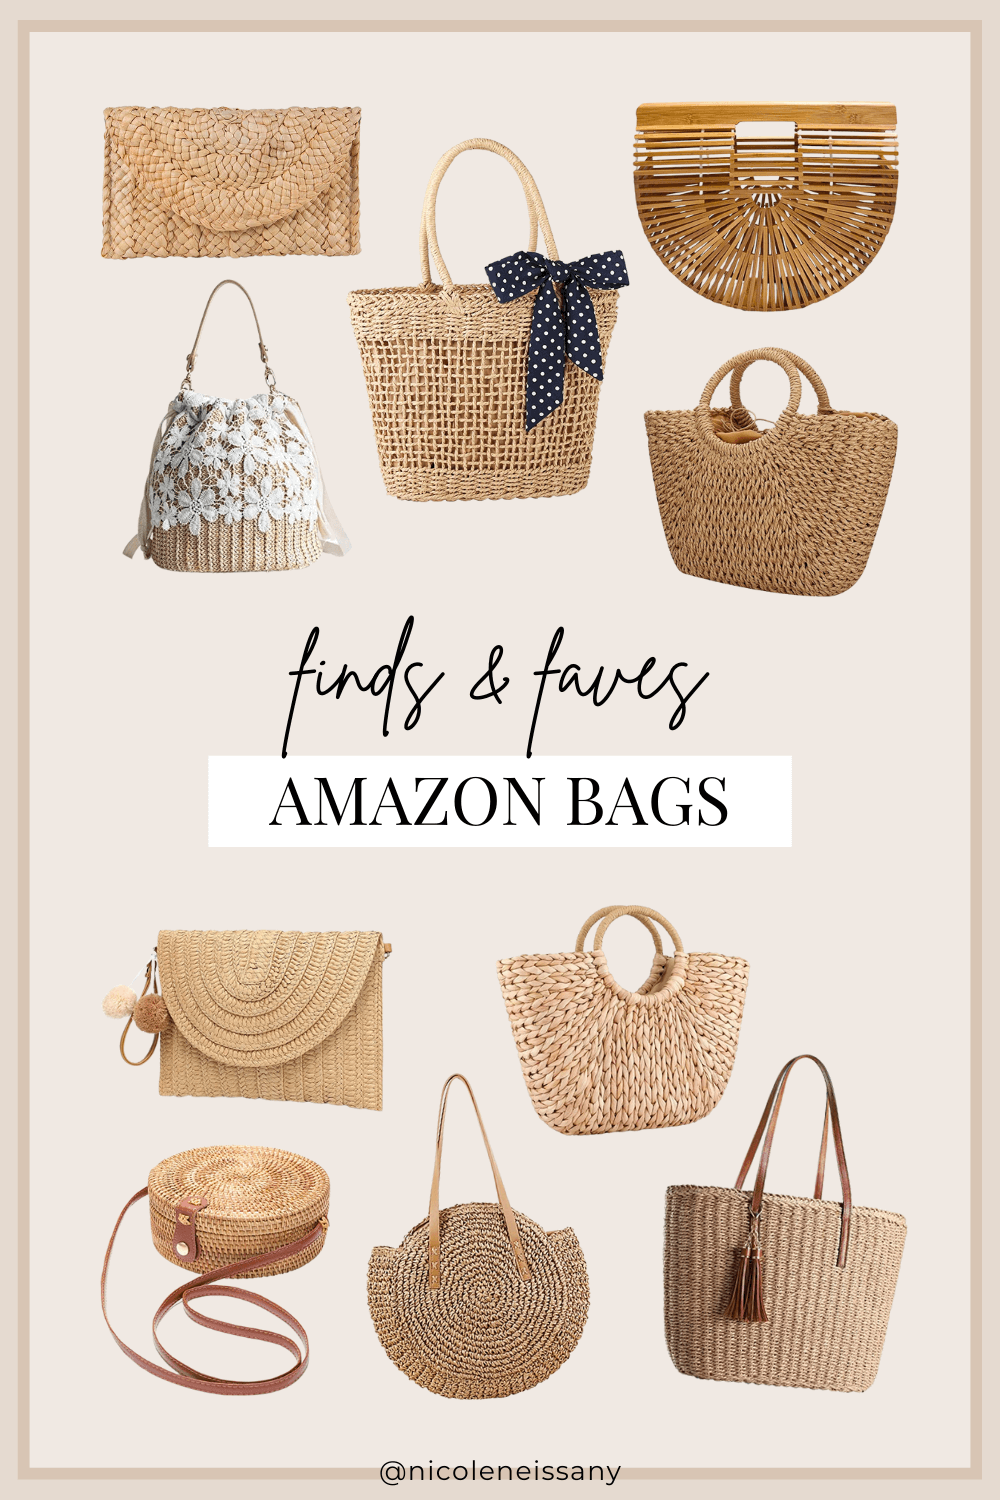 Summer Handbags: The 3 Chicest Must-Have Handbags for Summer